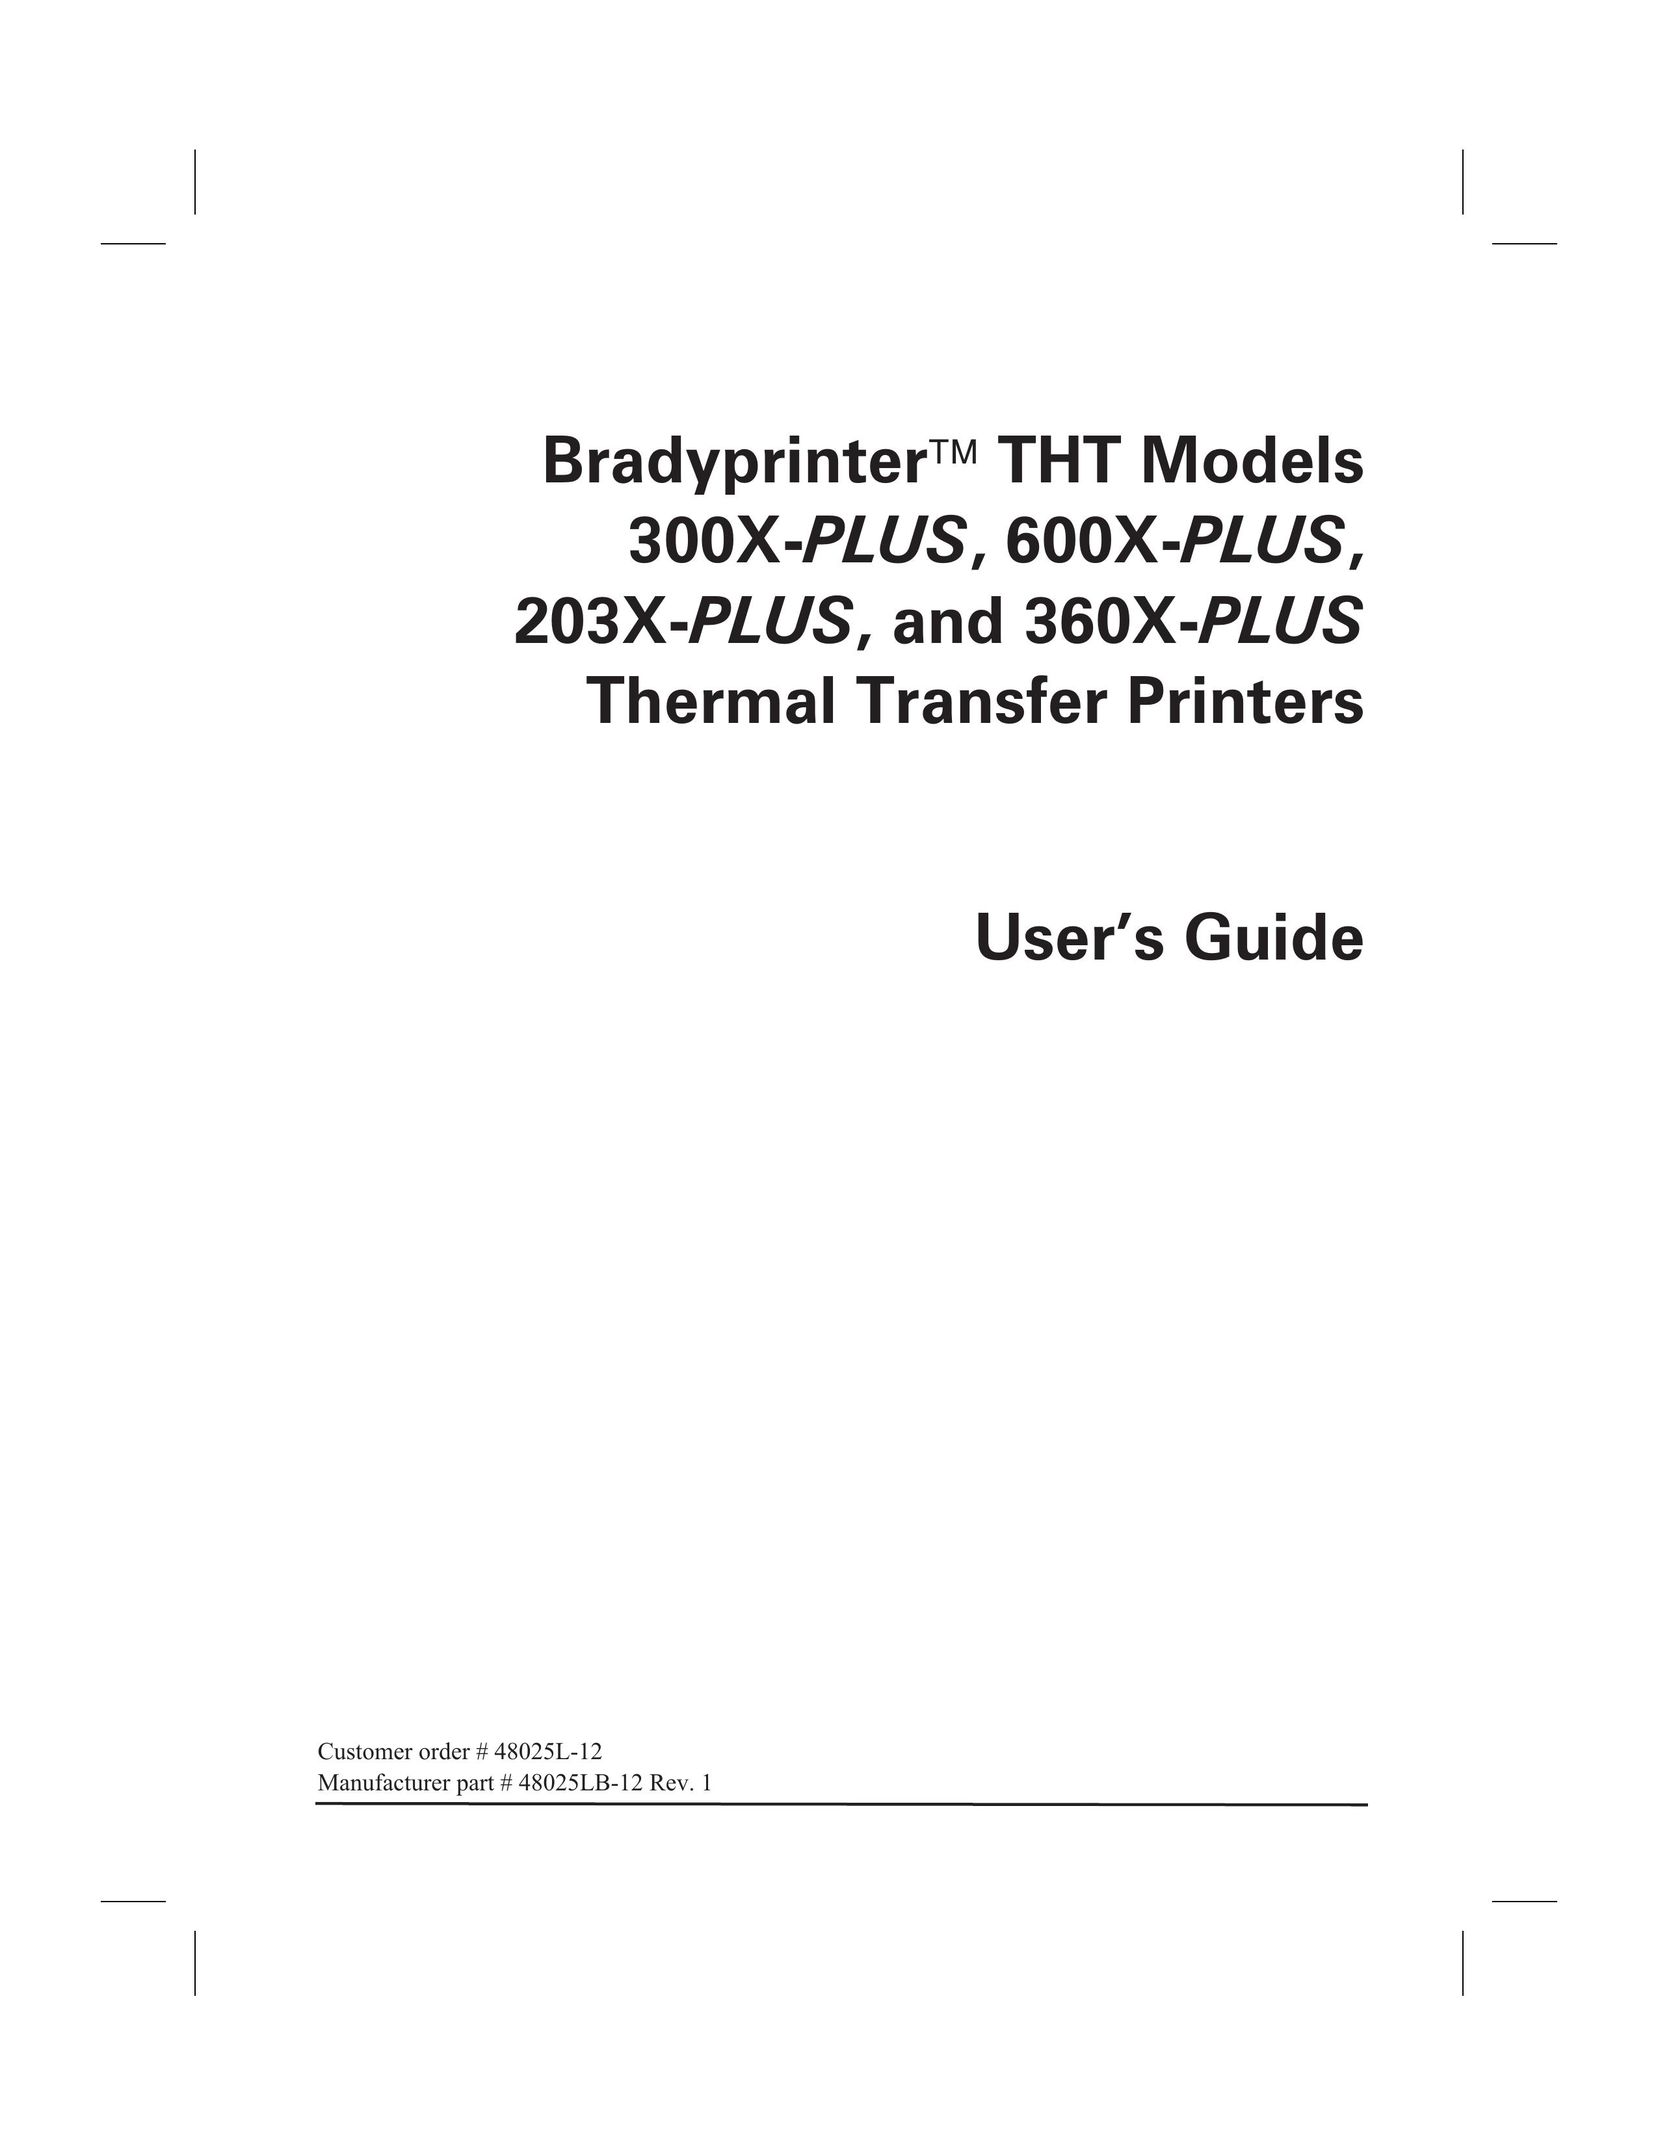 Brady 300X-PLUS Printer User Manual